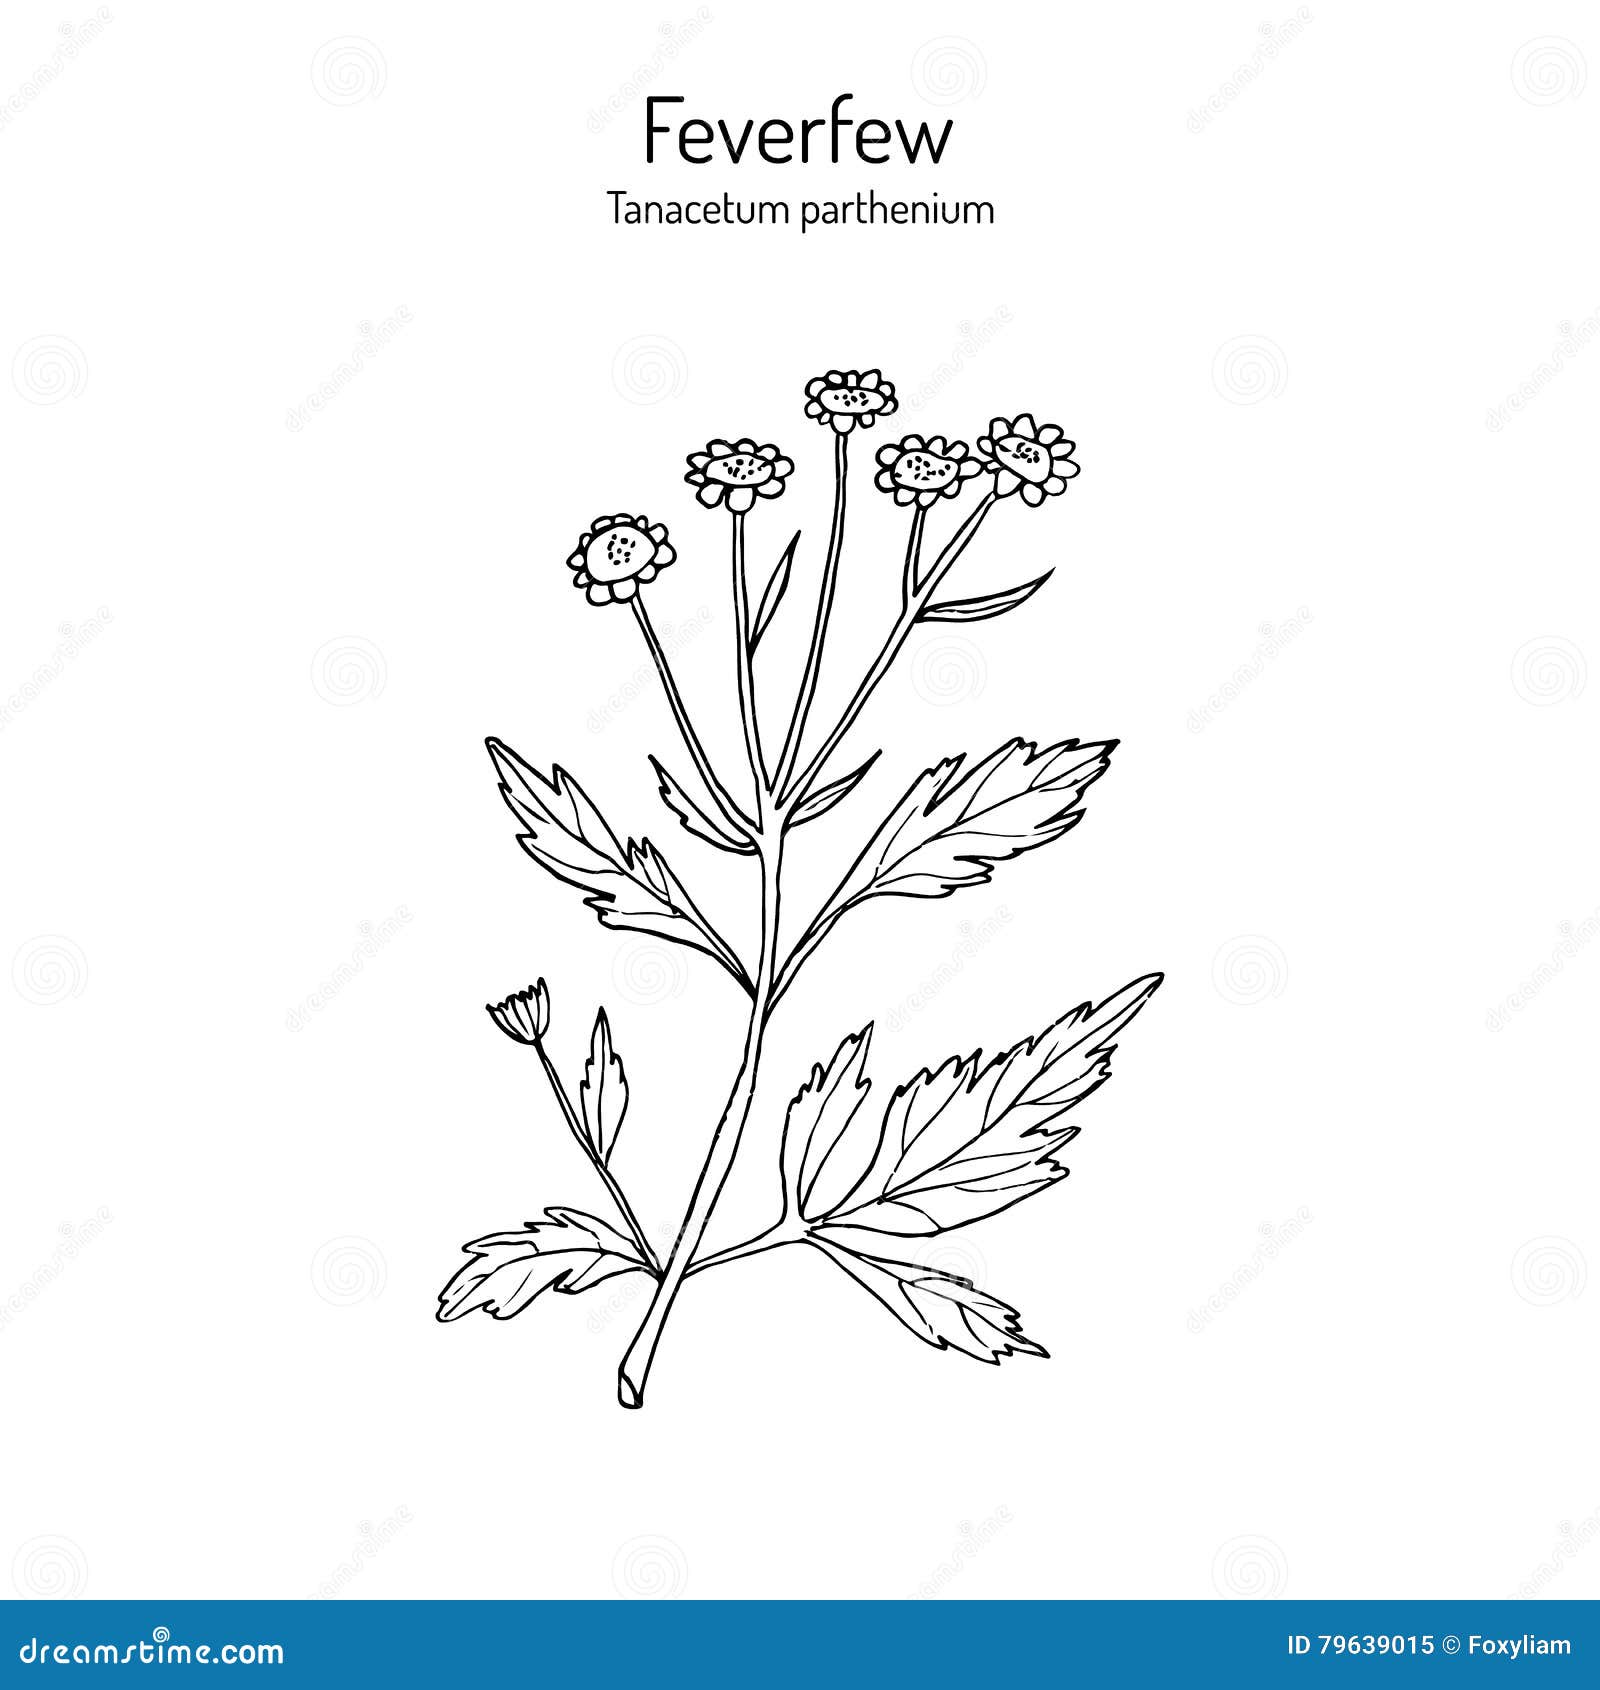 Feverfew - medicinal plant stock vector. Illustration of bachelor ...